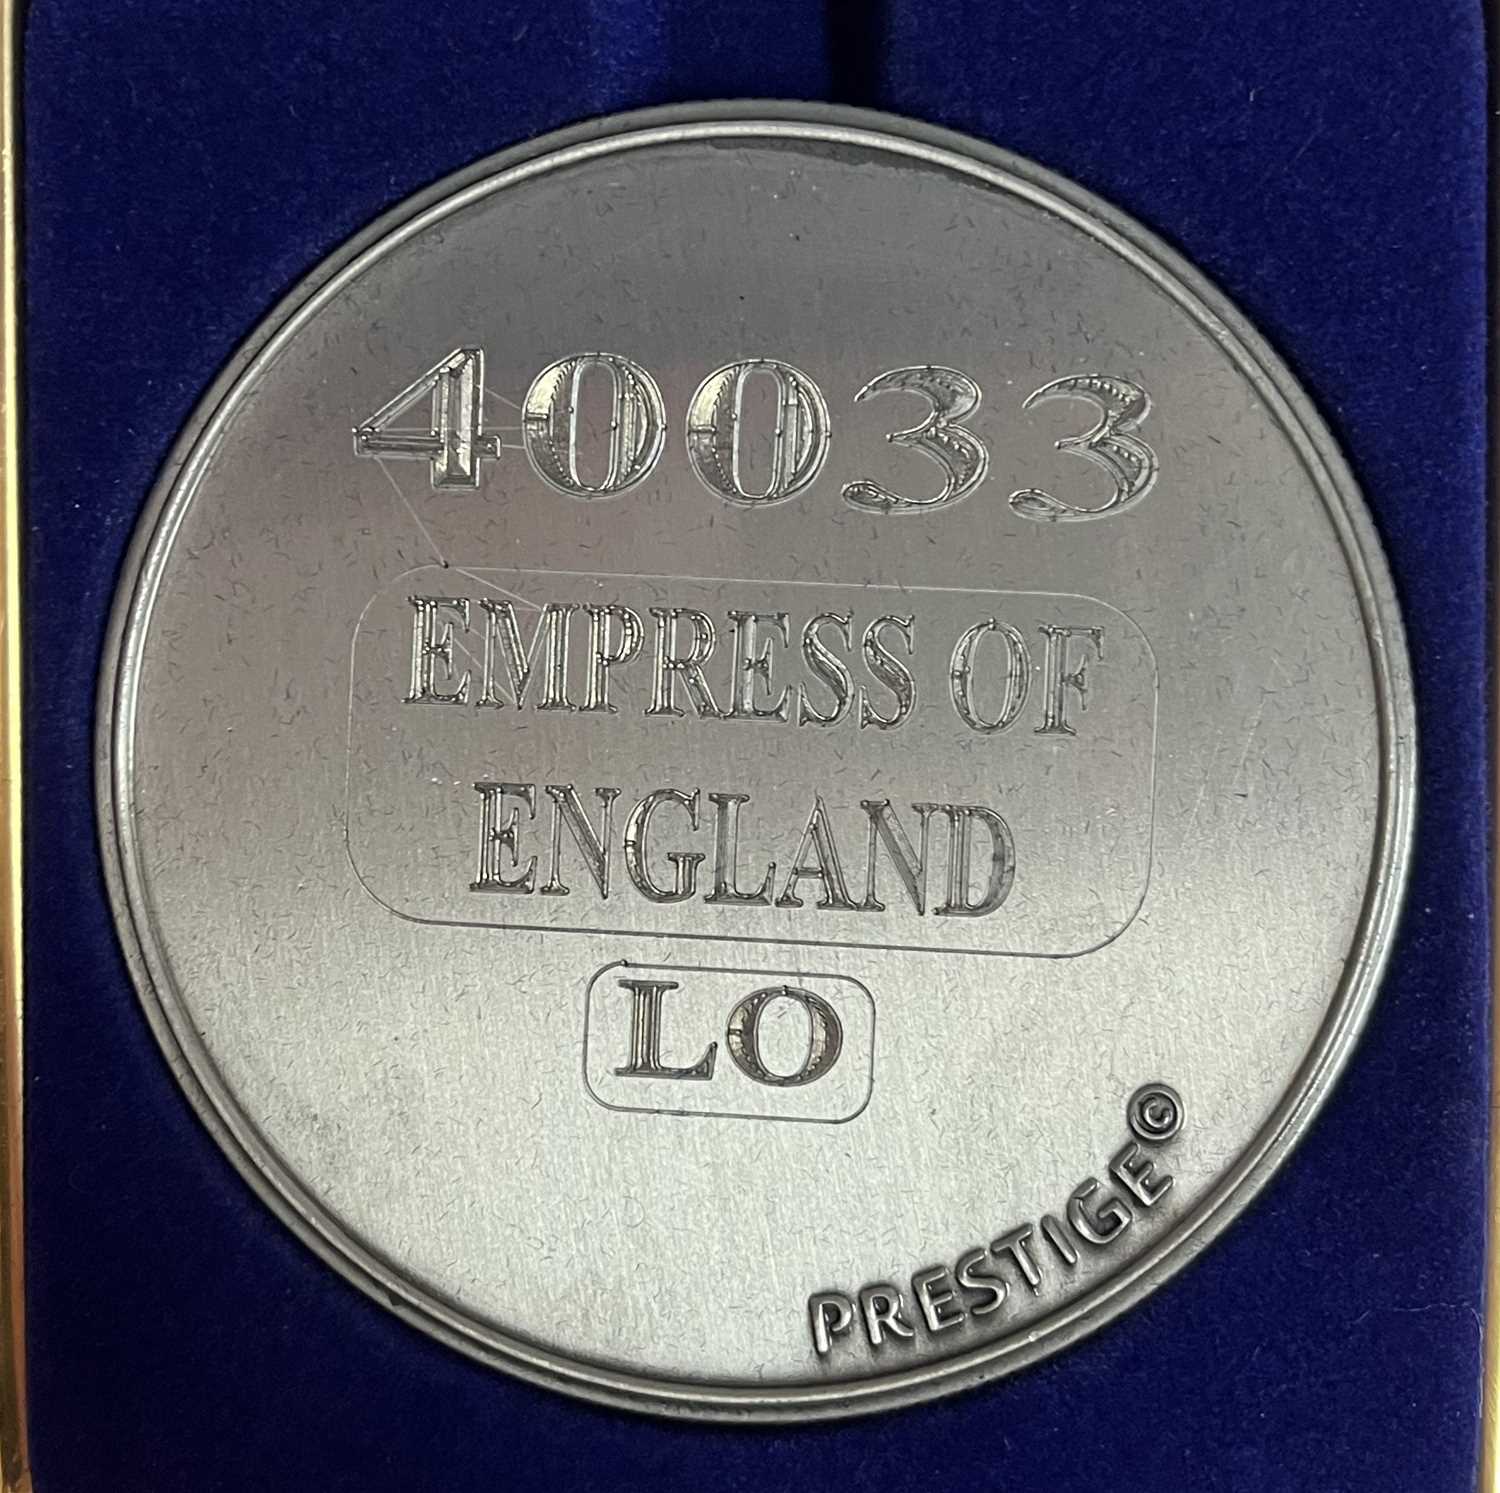 A commemorative silver award medallion to 40033 Empress of England LO